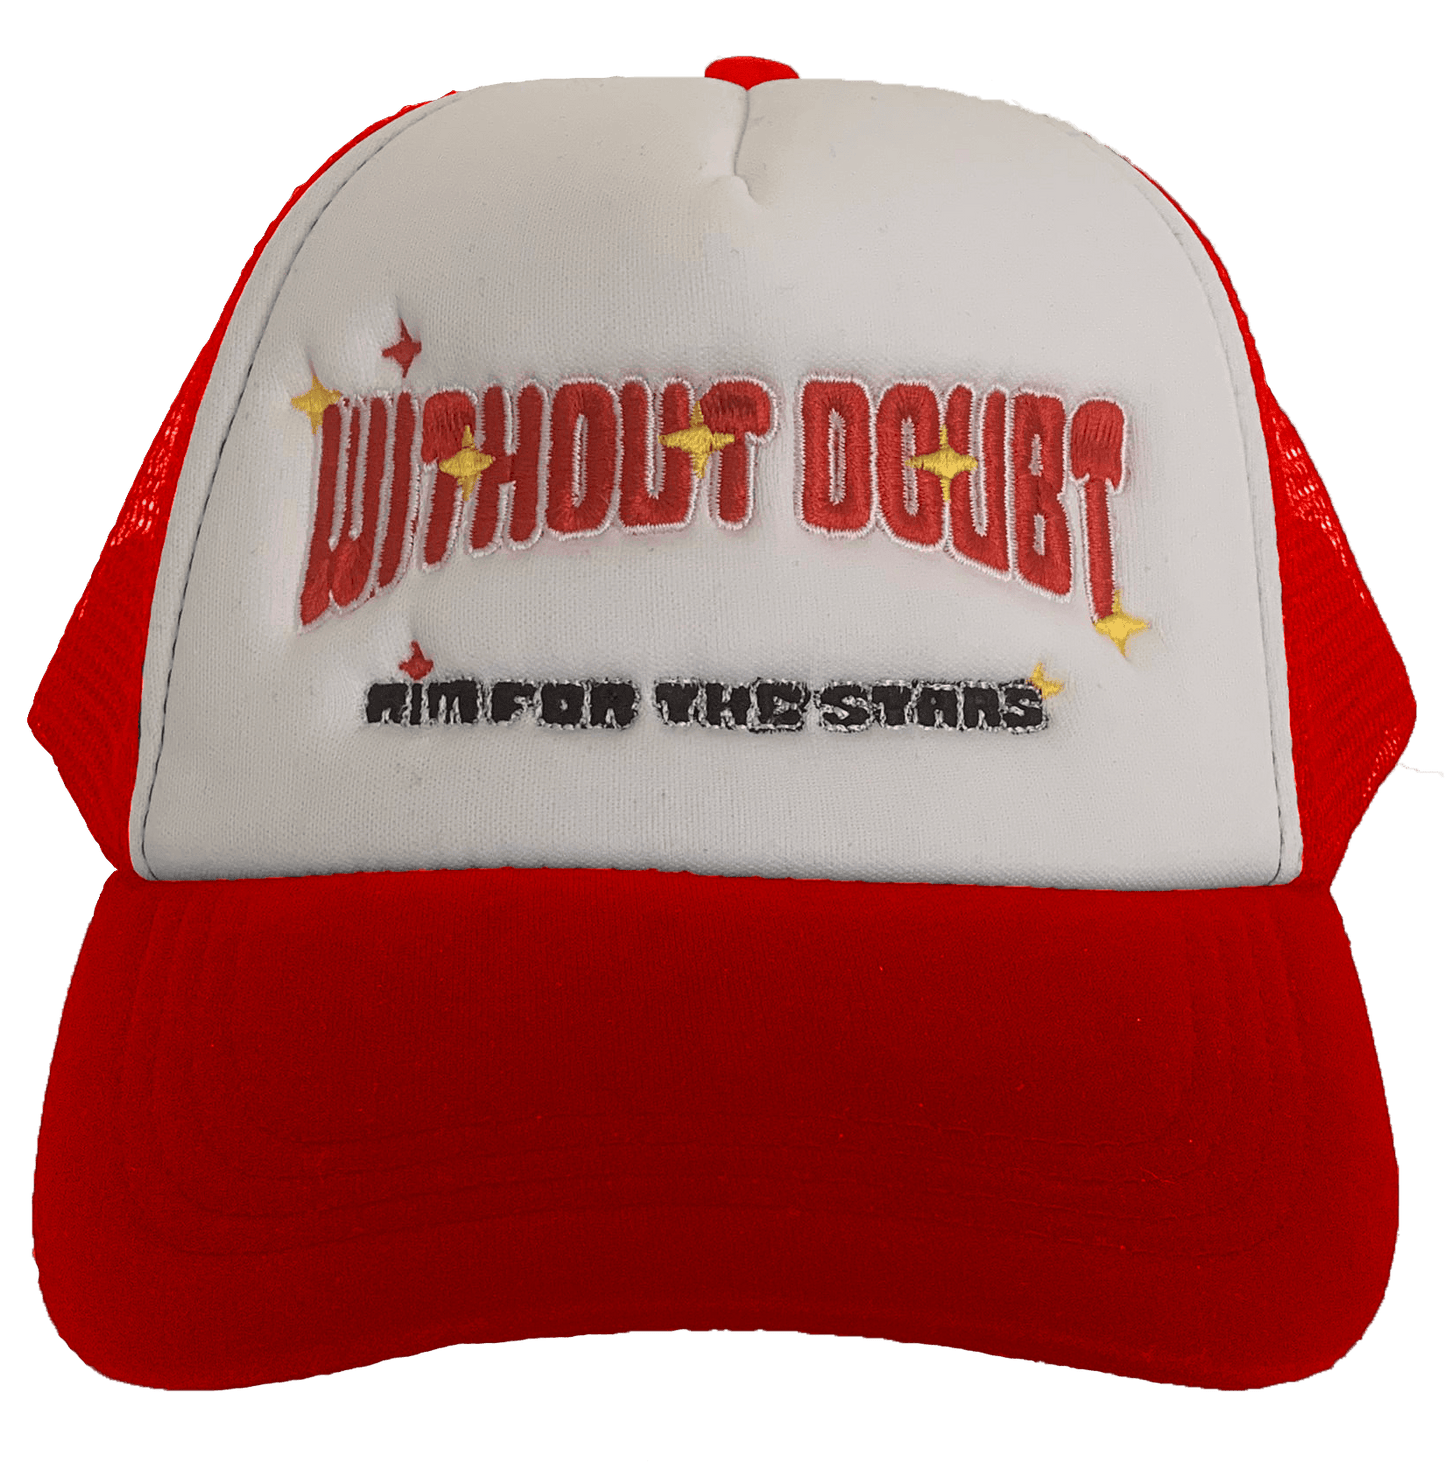 Red Trucker Hat - Withøut Døubt.